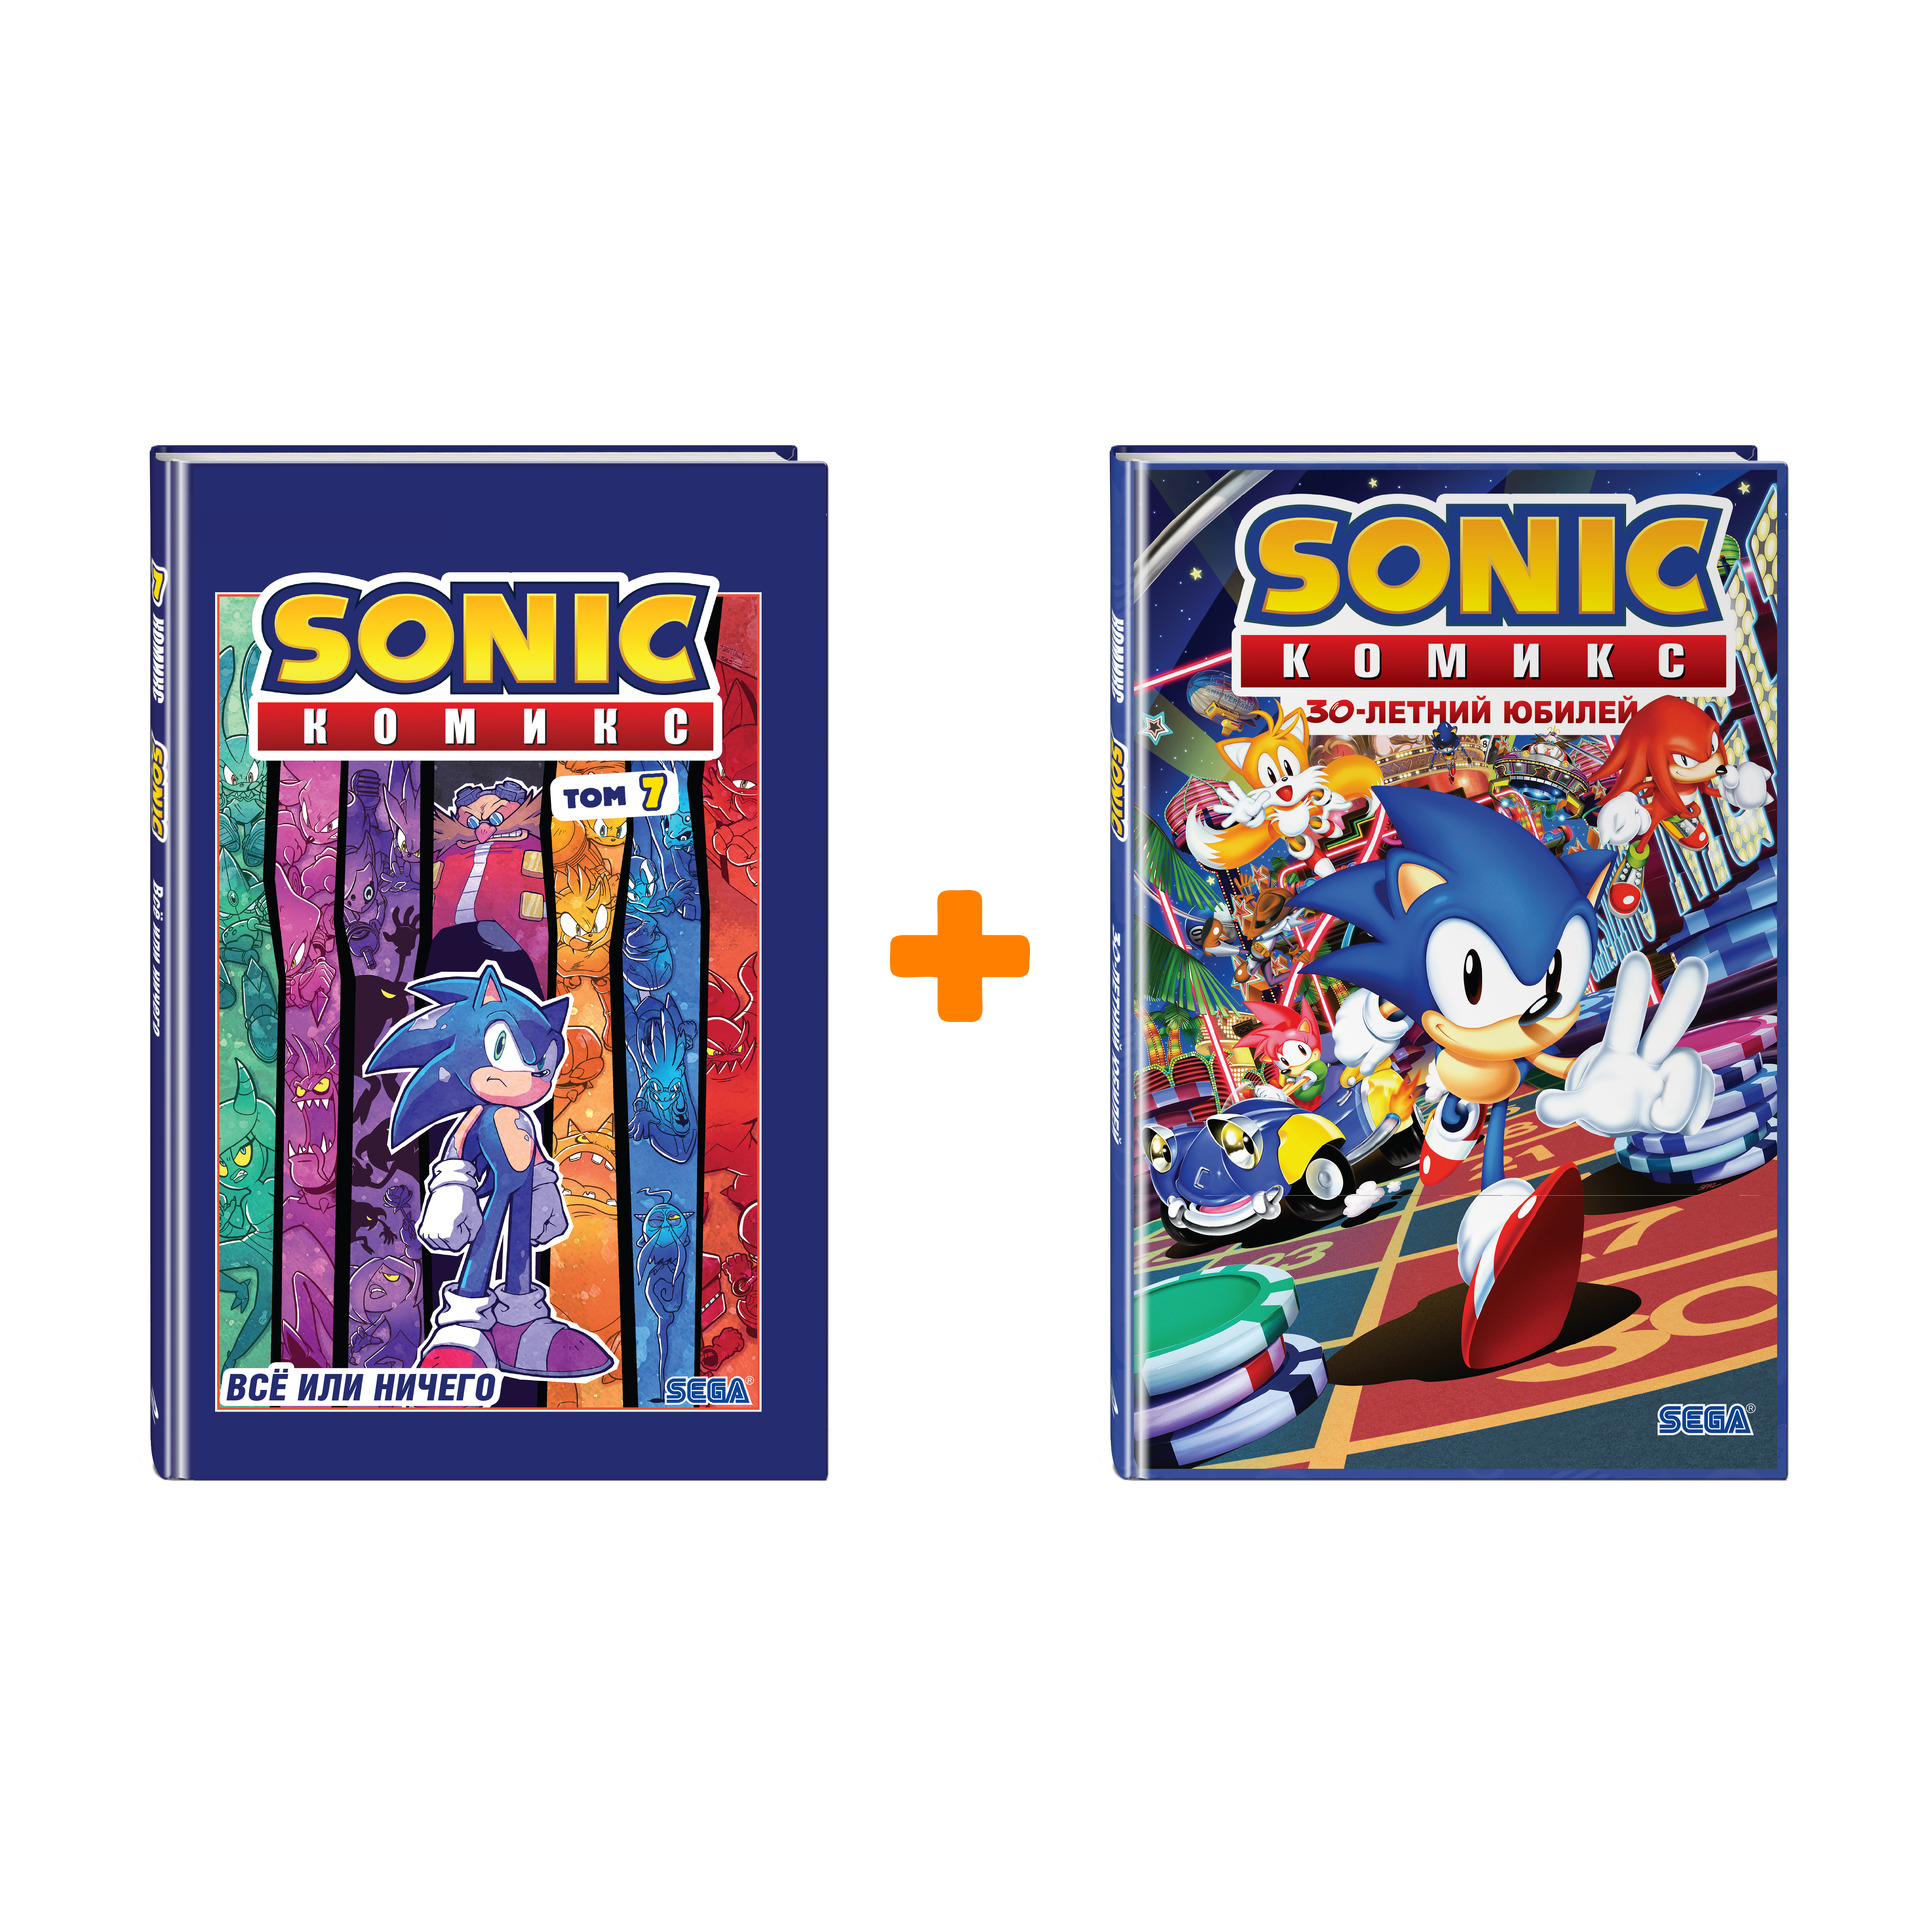 Комлект комиксов Sonic: Всё или ничего – Том 7 + 30–летний юбилей (перевод от Diamond Dust) цена и фото